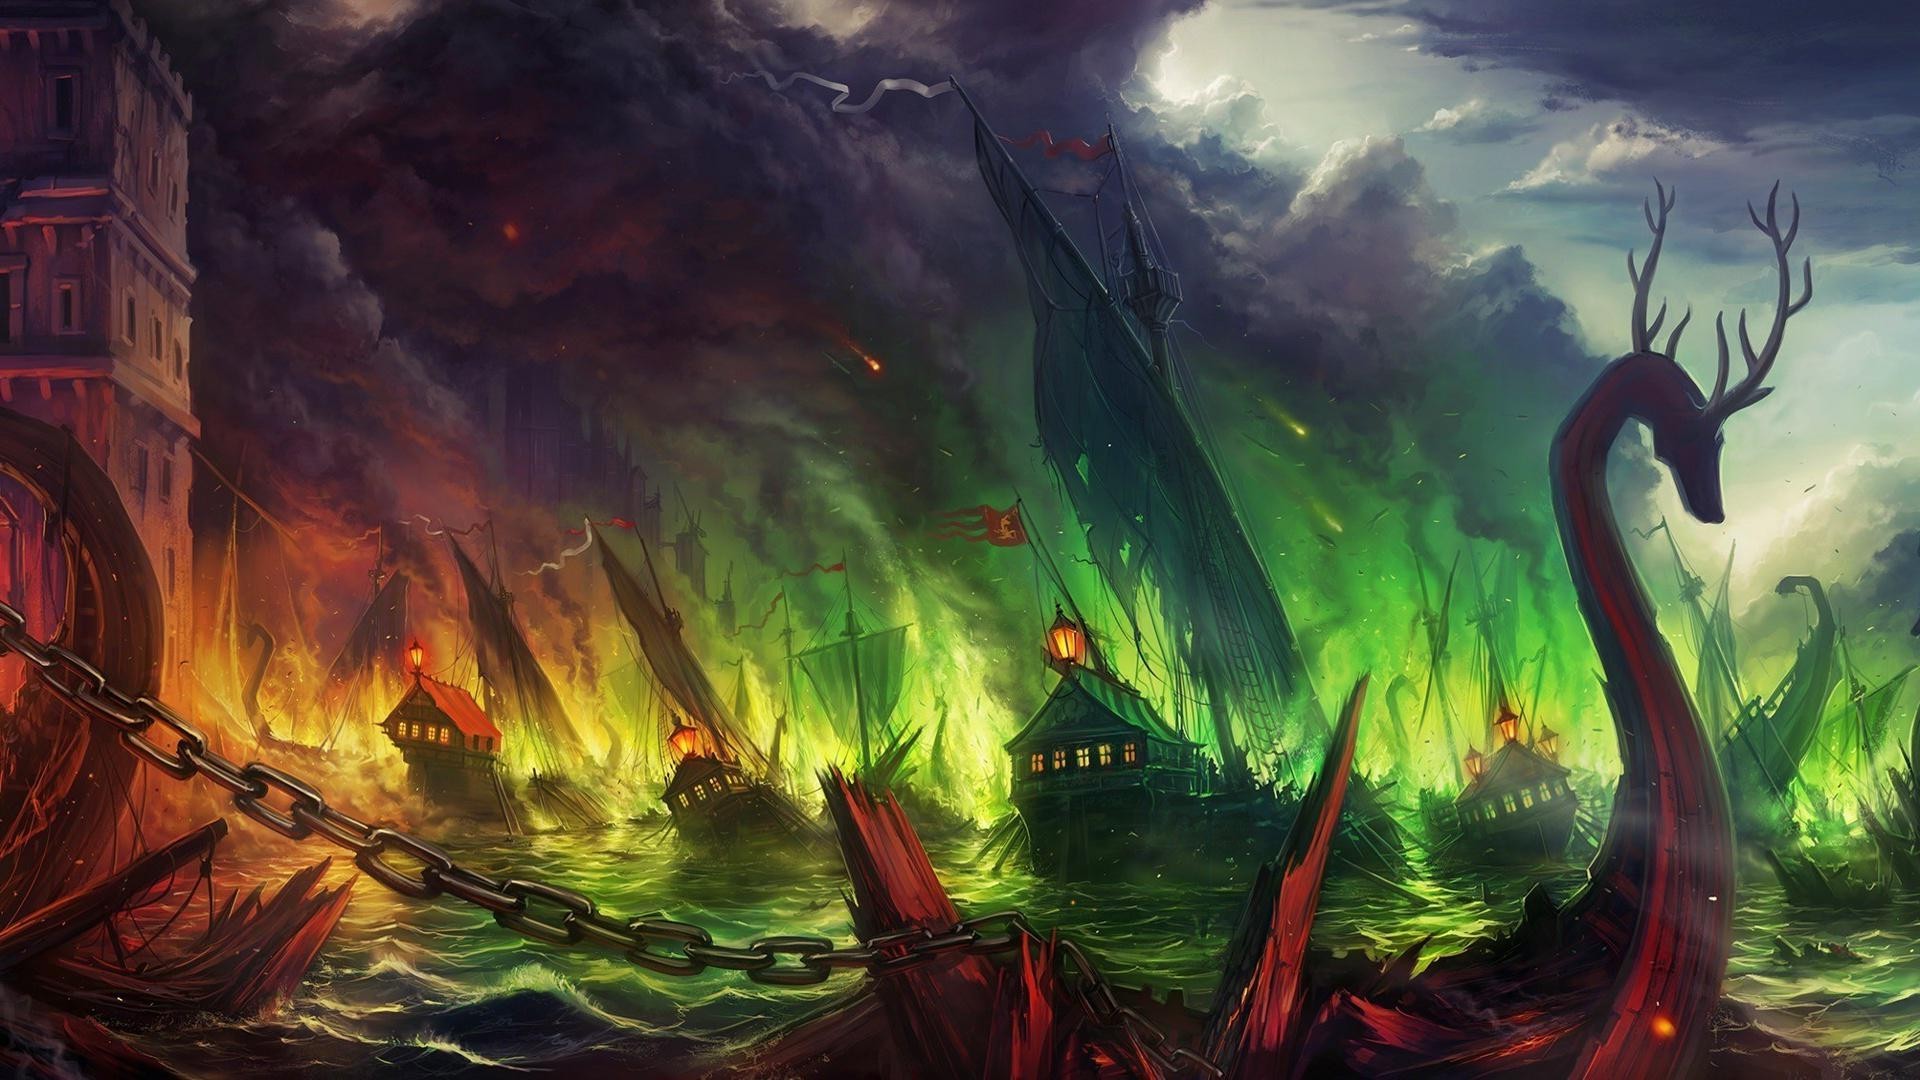 Wallpaper, 1920x1080 px, artwork, Blackwater, clouds, concept art, fantasy art, fire, Game of Thrones, Kings Landing, sea, ship, sinking ships, smoke, war 1920x1080